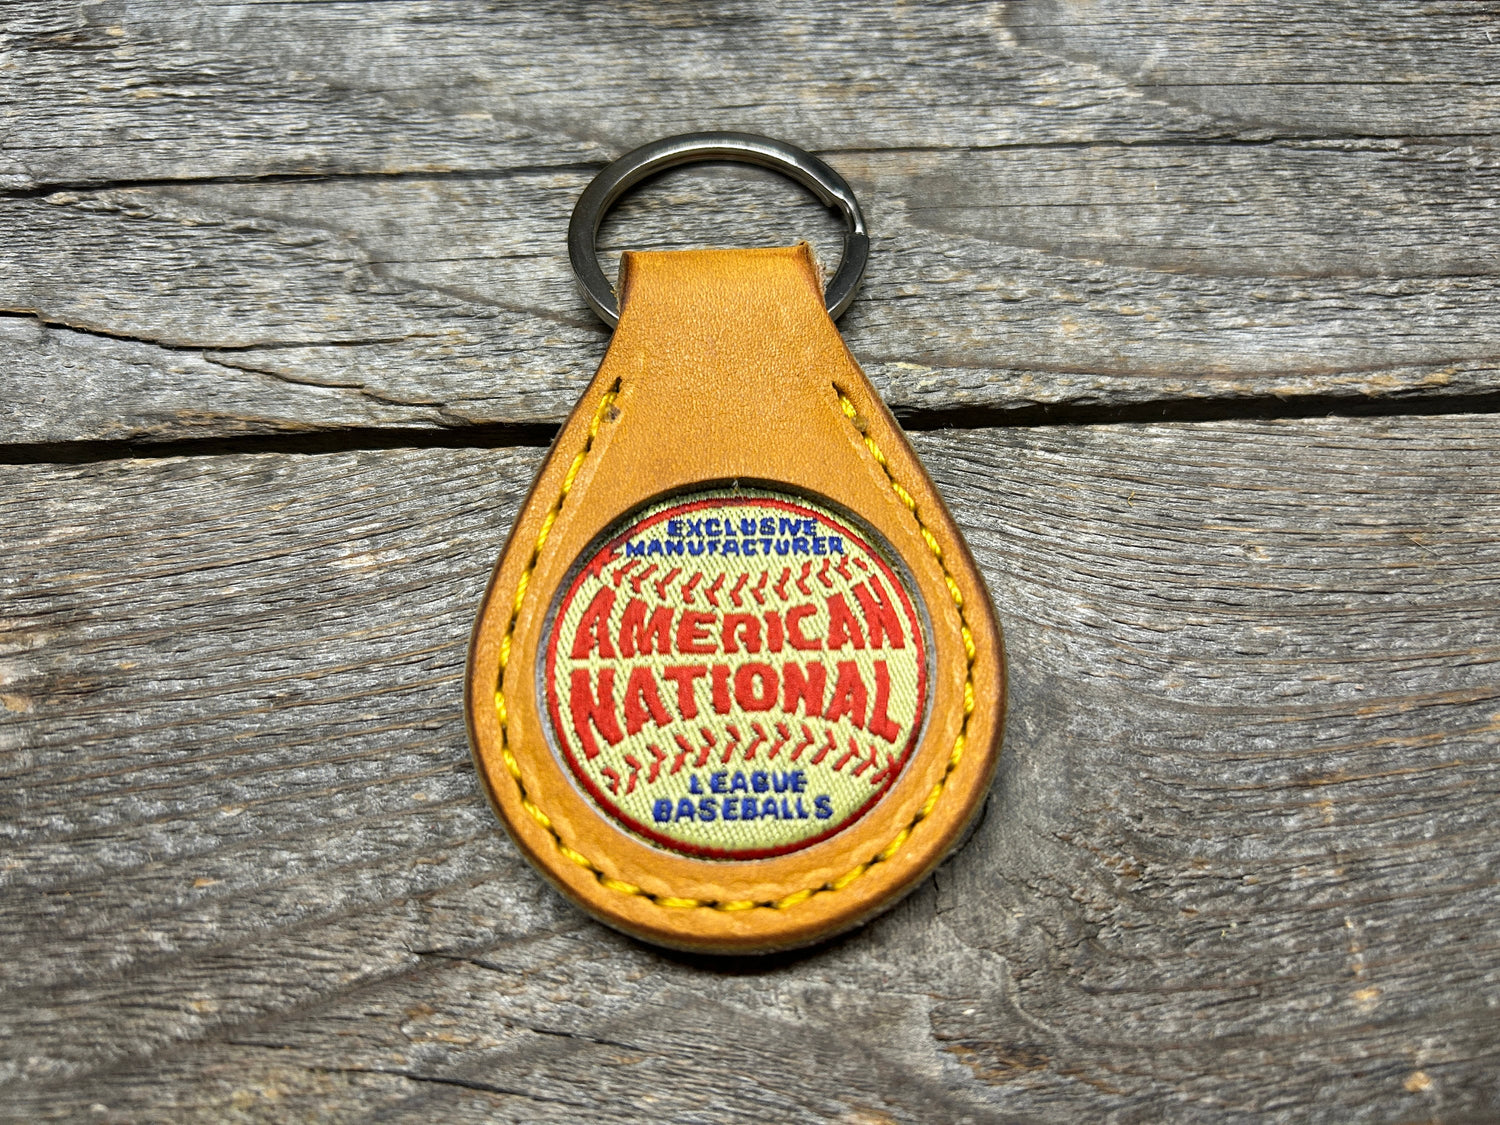 New Item! Vintage Spalding American/National League Baseball Glove Key Chain!